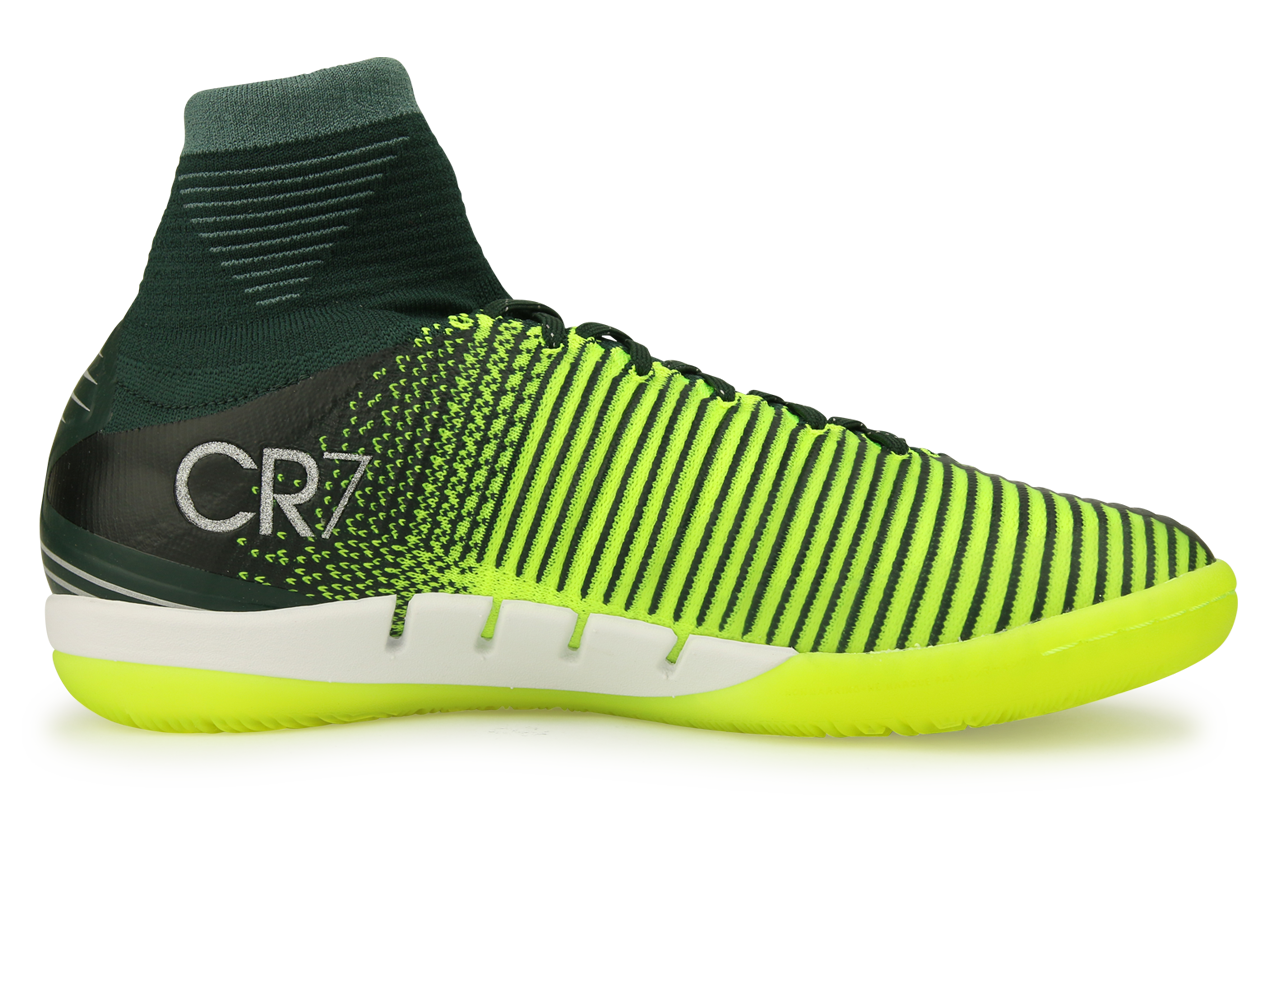 Nike Men's MercurialX Proximo II CR7 Indoor Soccer Shoes Seaweed/Volt/Hasta/White